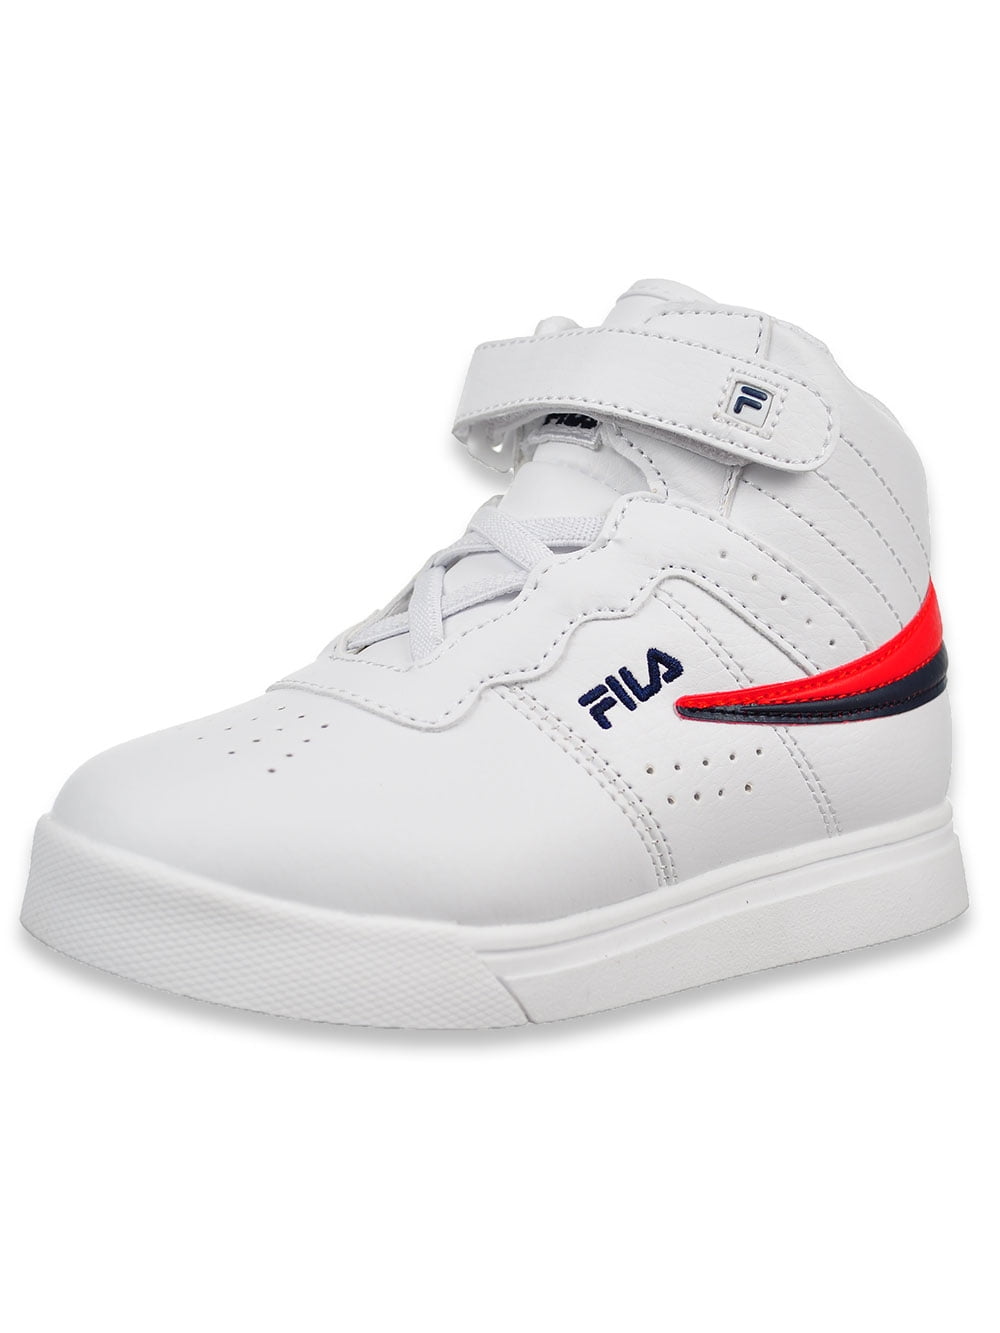 Fila Boys' Vulc 13 Mid Plus Hi-Top Sneakers (Sizes 6 - 10) -  white/navy/red, 10 toddler